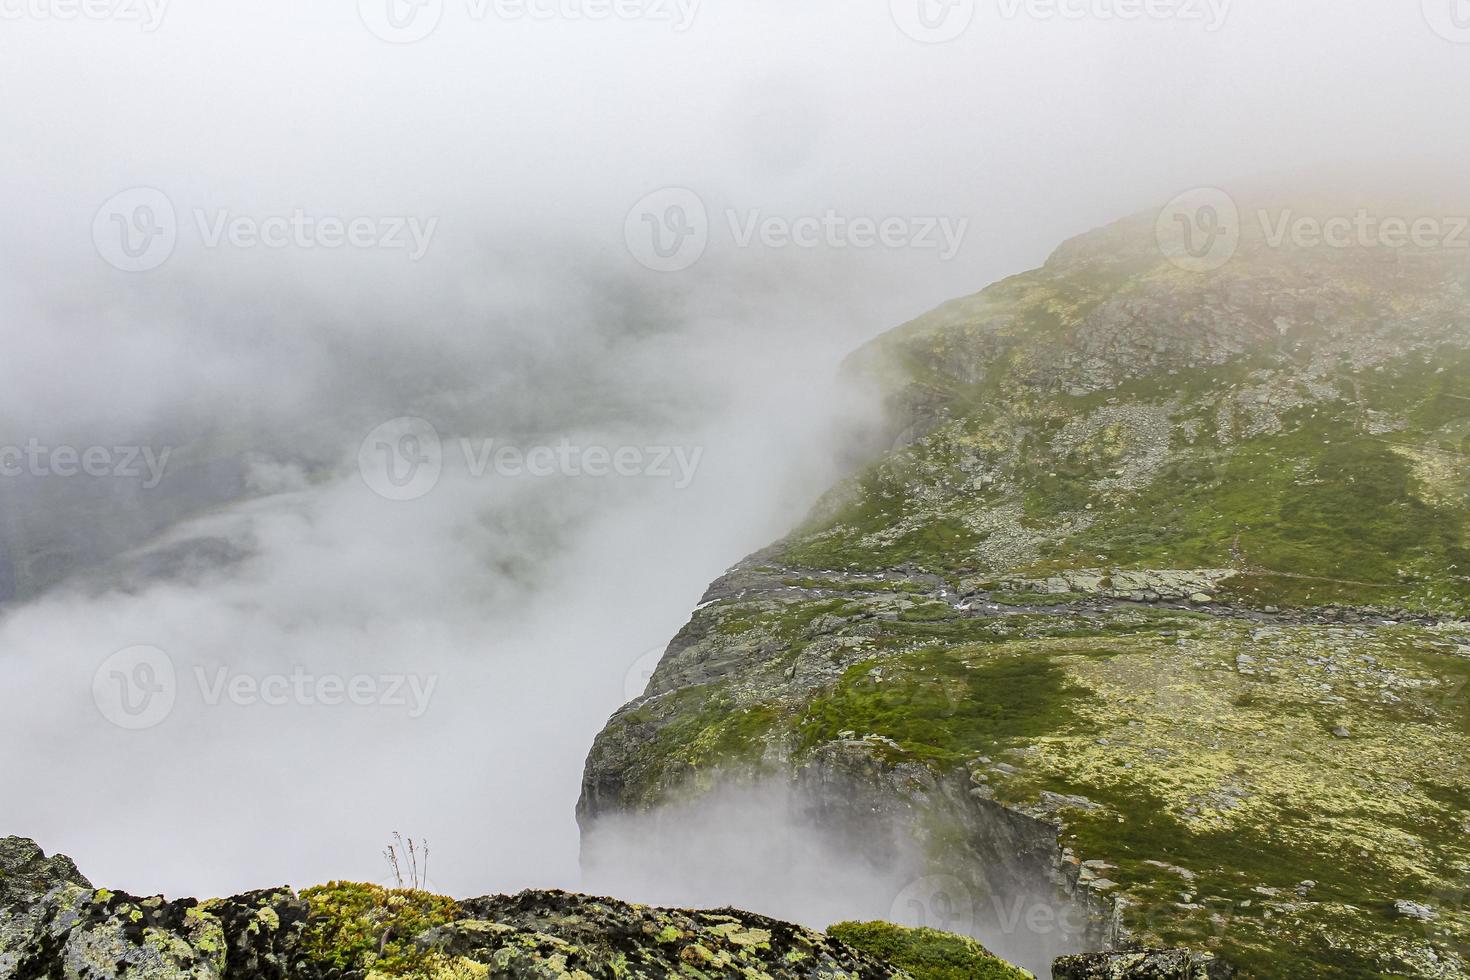 hydnefossen wasserfall hydna fluss auf veslehodn veslehorn berg, hemsedal, norwegen. foto